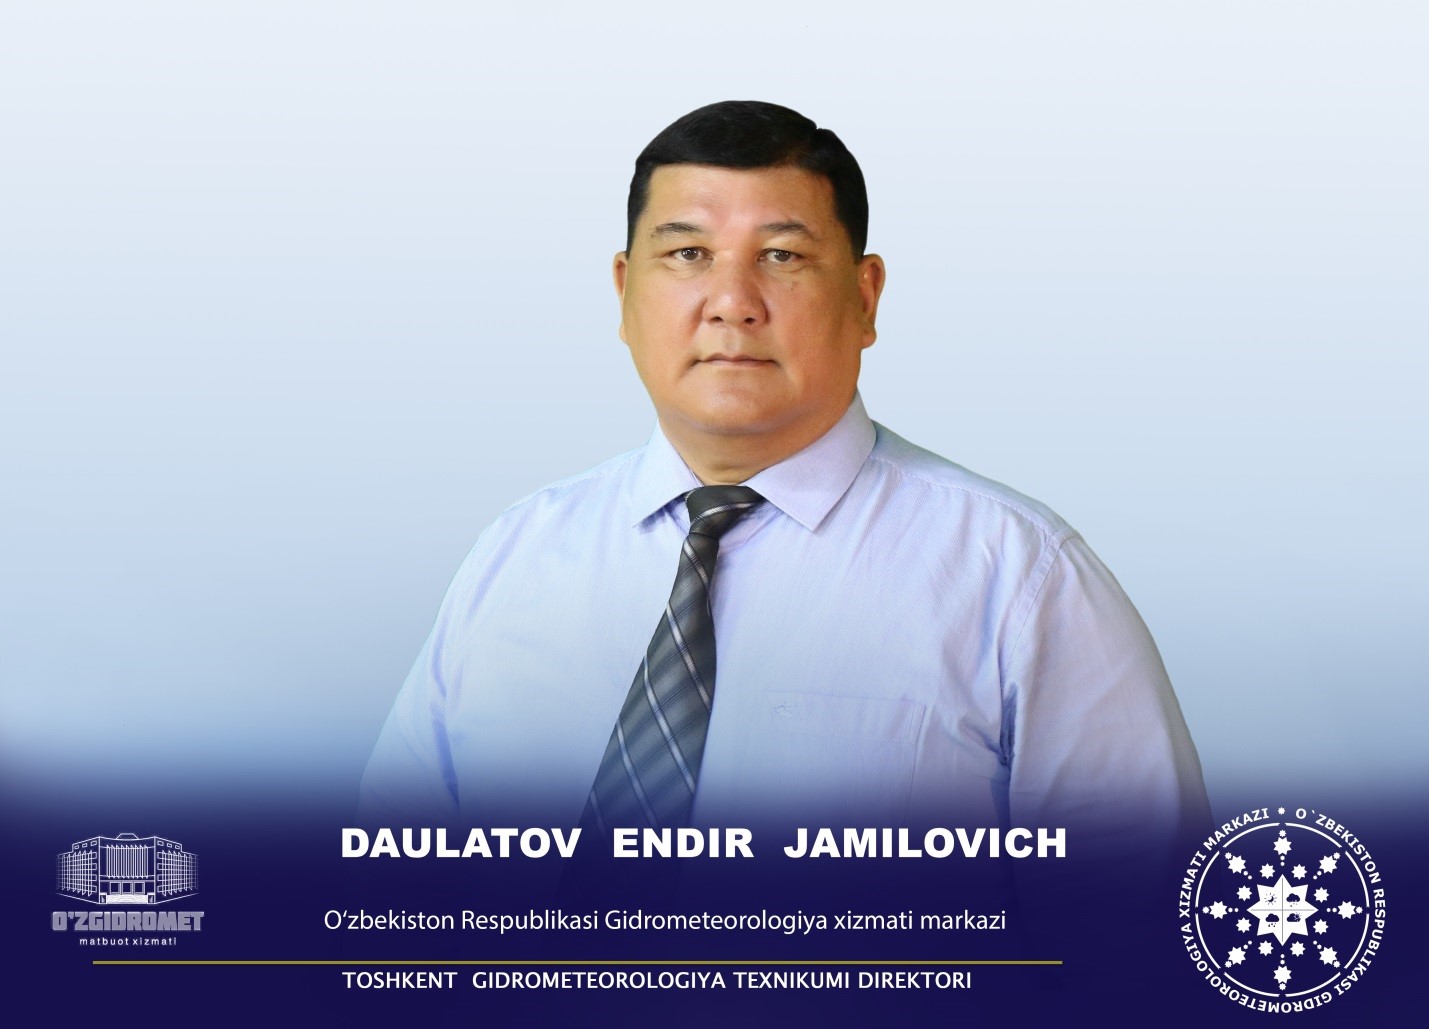 Daulatov  Endir  Jamilovich